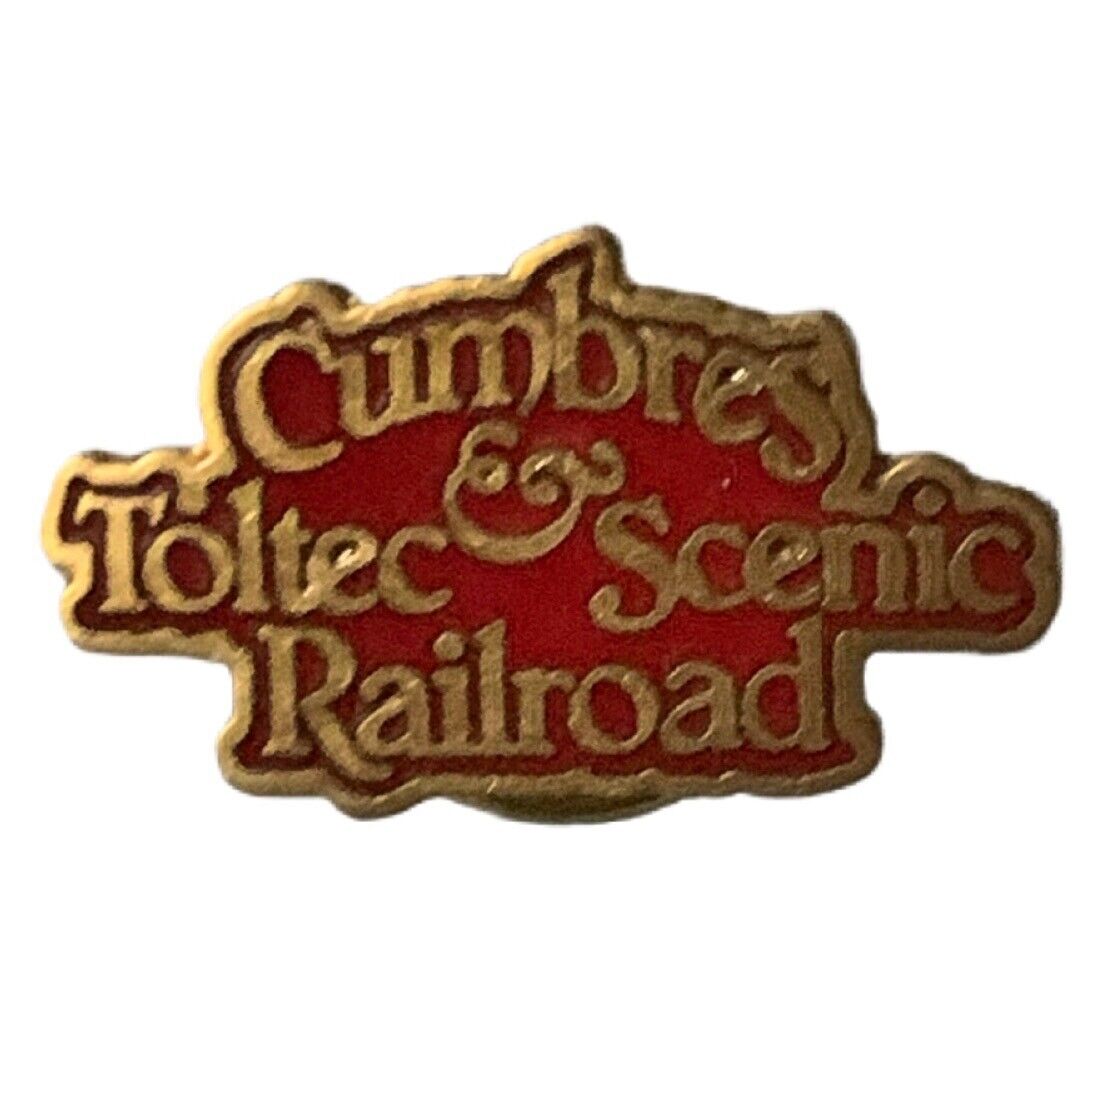 Vintage Cumbres & Toltec Scenic Railroad Travel Souvenir Pin